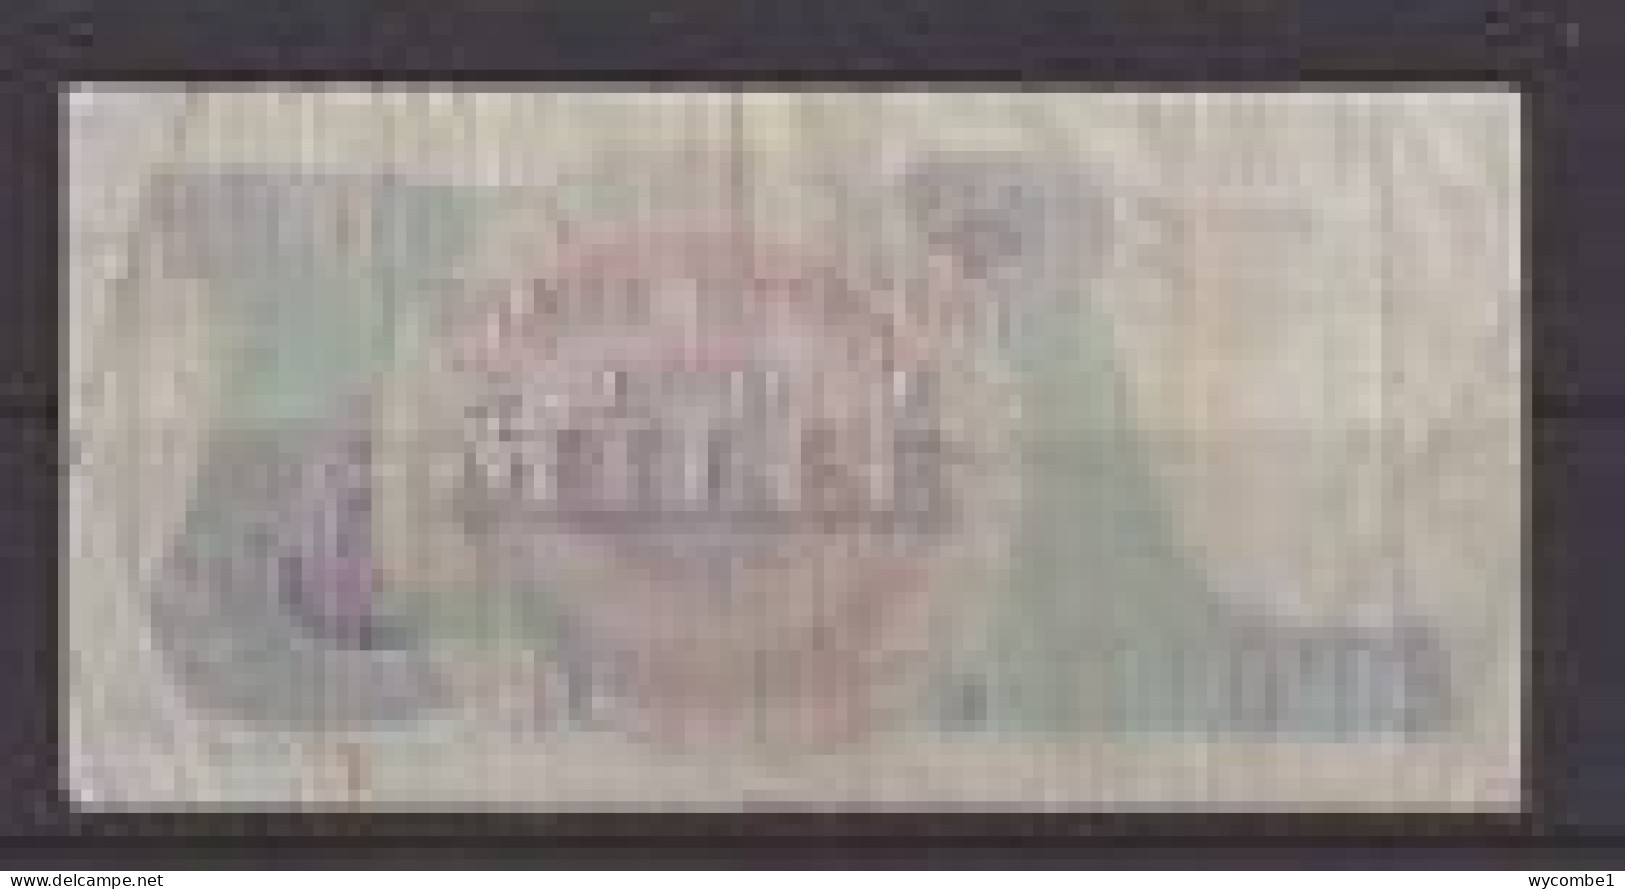 ITALY - 1962 1000 Lira Circulated Banknote - 1000 Lire